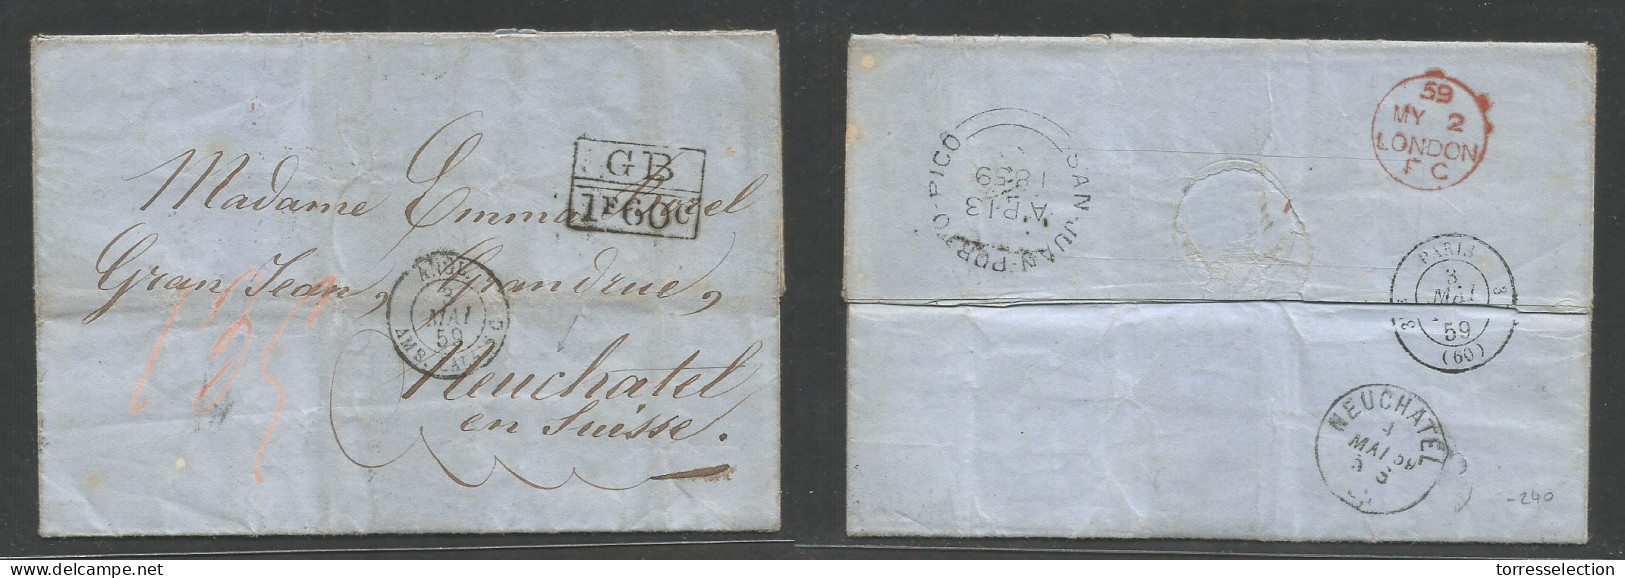 PUERTO RICO. 1859 (14 April) San Juan - Switzerland, Neuchatel (4 May) Via British Post Office S. Juan - London - Paris. - Porto Rico